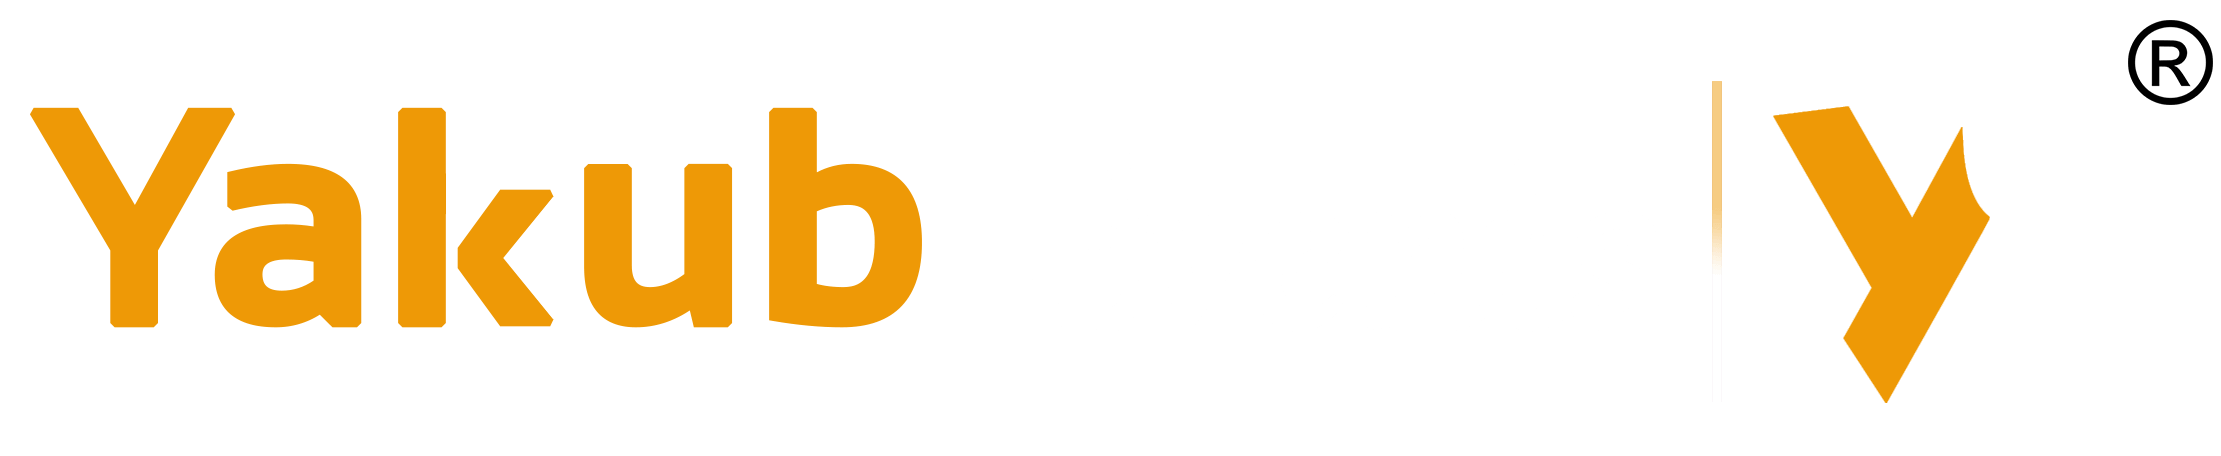 yakub events logo